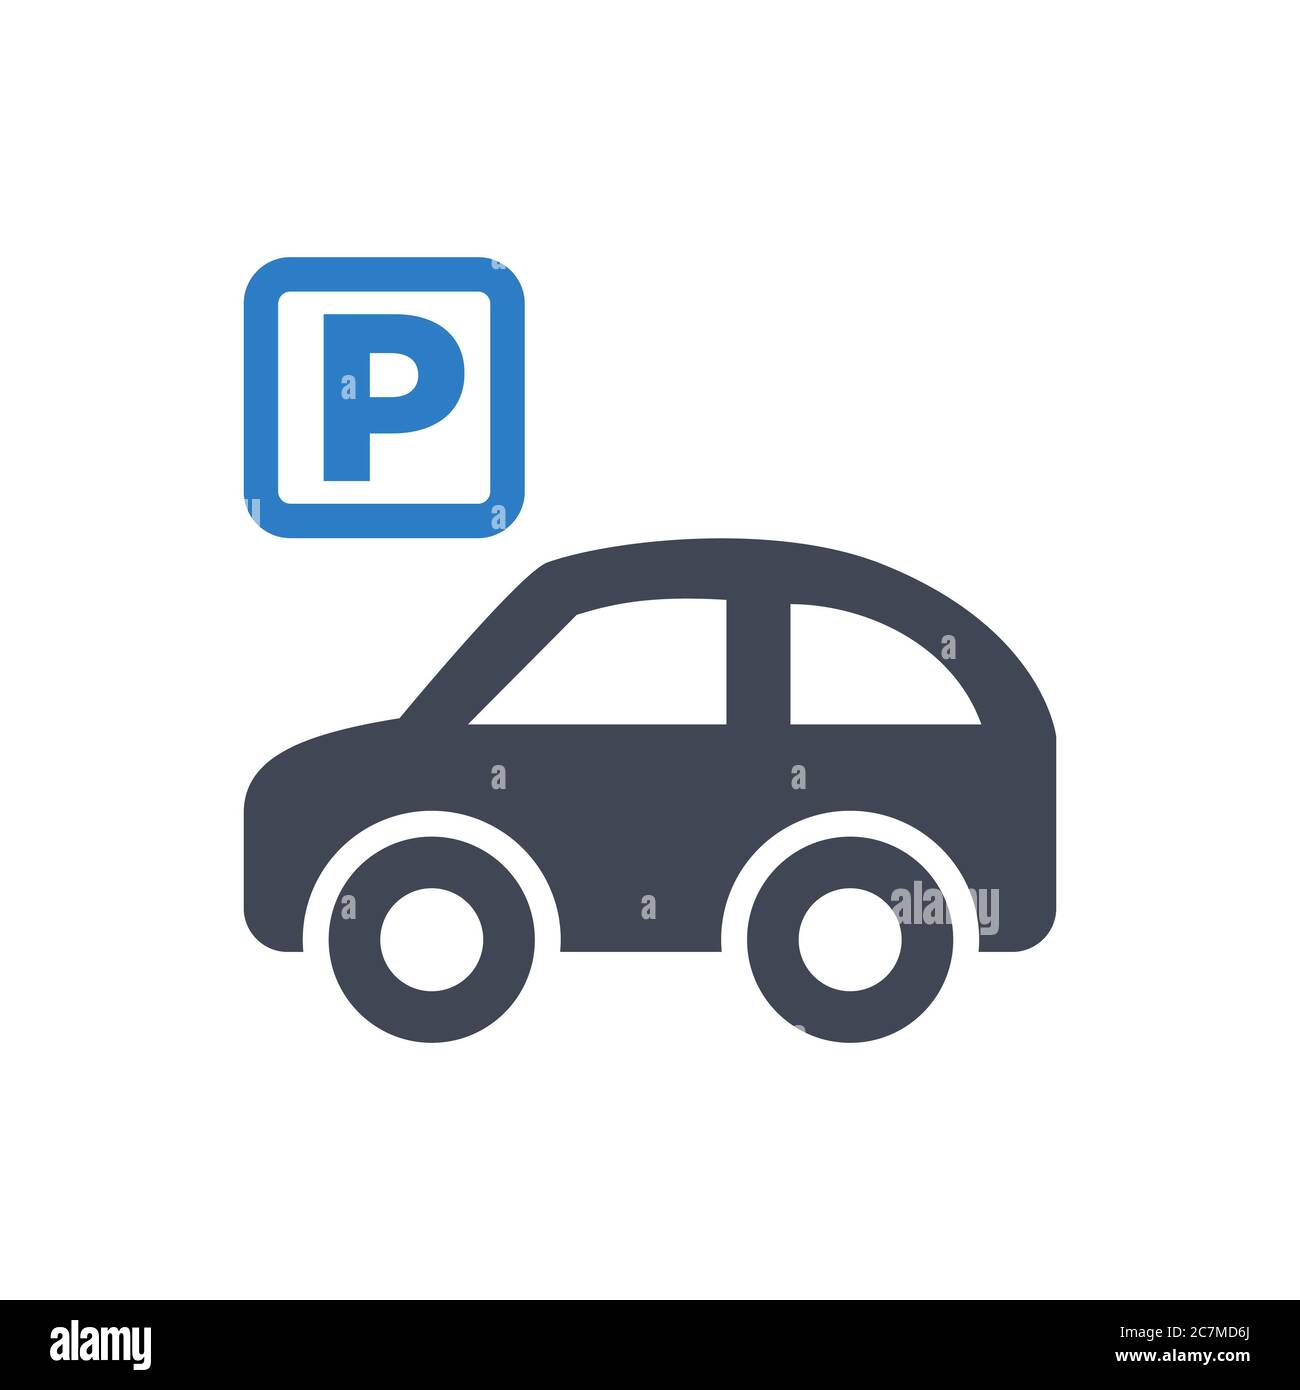 Parking lot icon Stock Photo